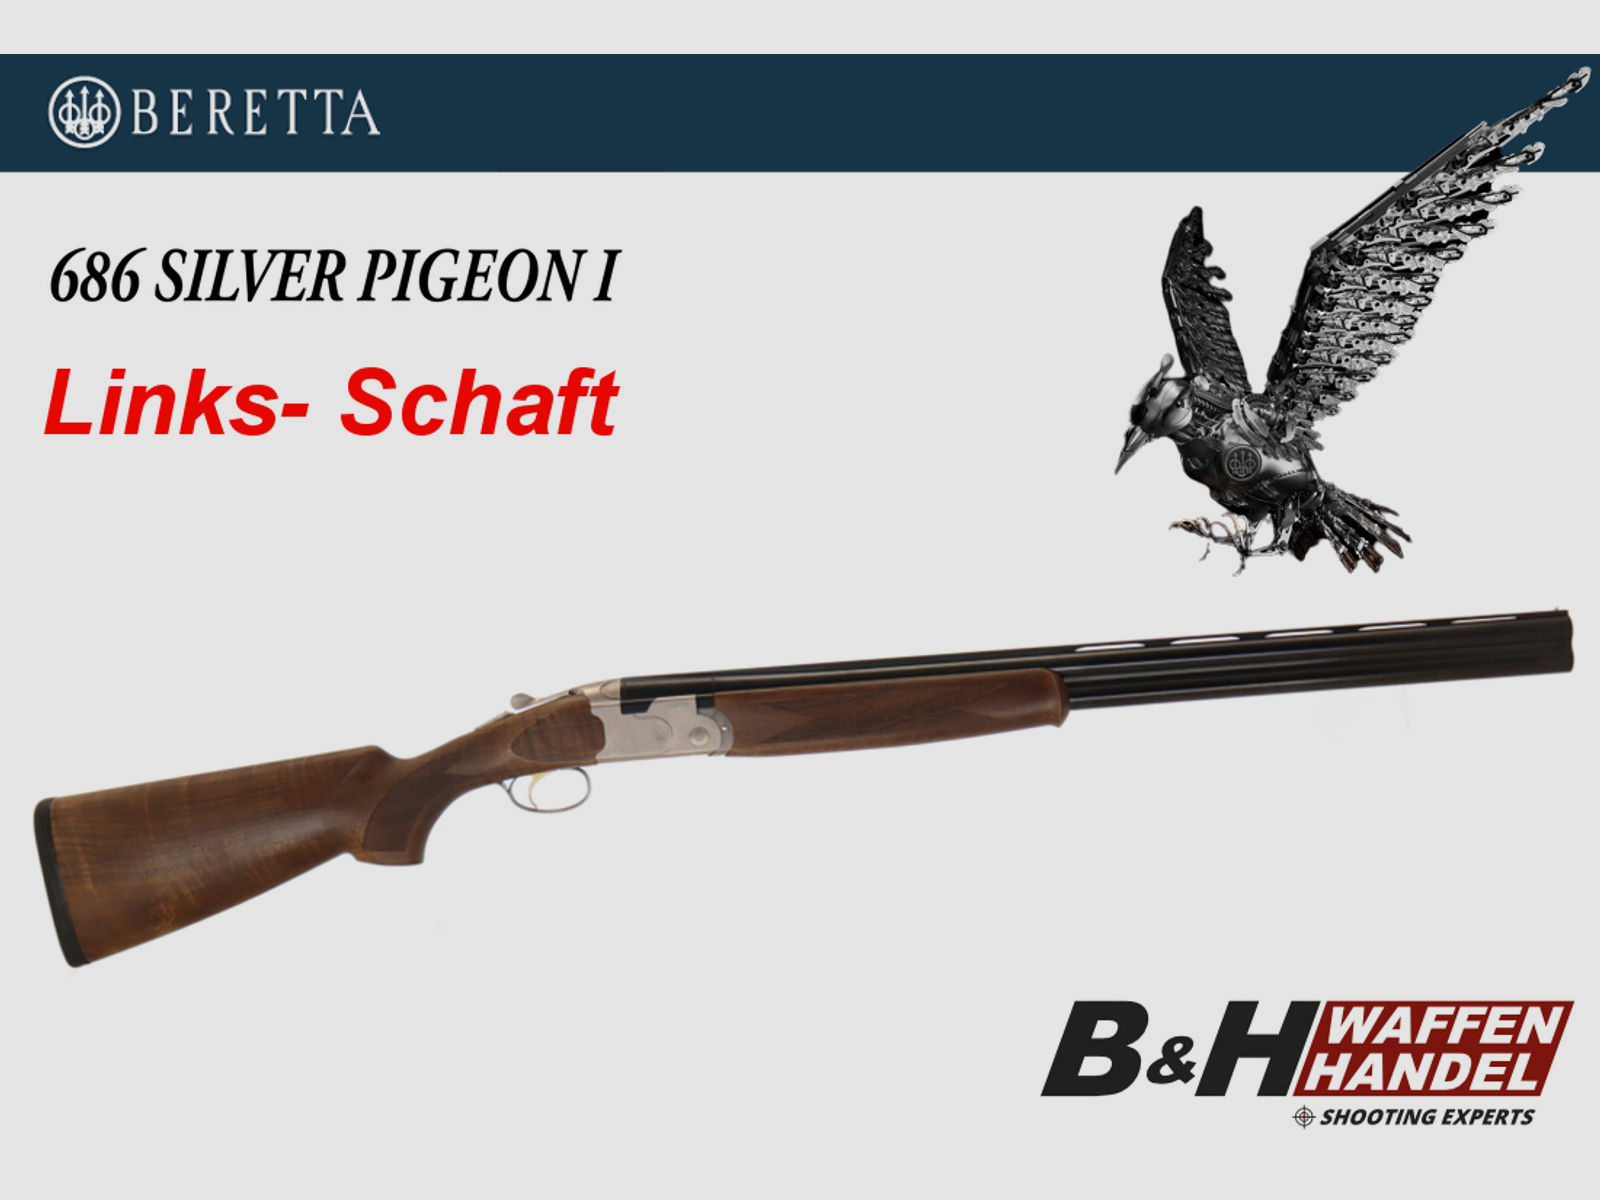 Neu: Links Bockflinte Beretta 686 Silver Pigeon 1 Jagd LL 71cm Bockflinte Bockdoppelflinte BDF mit Stahlschrotbeschuss Linksschaft